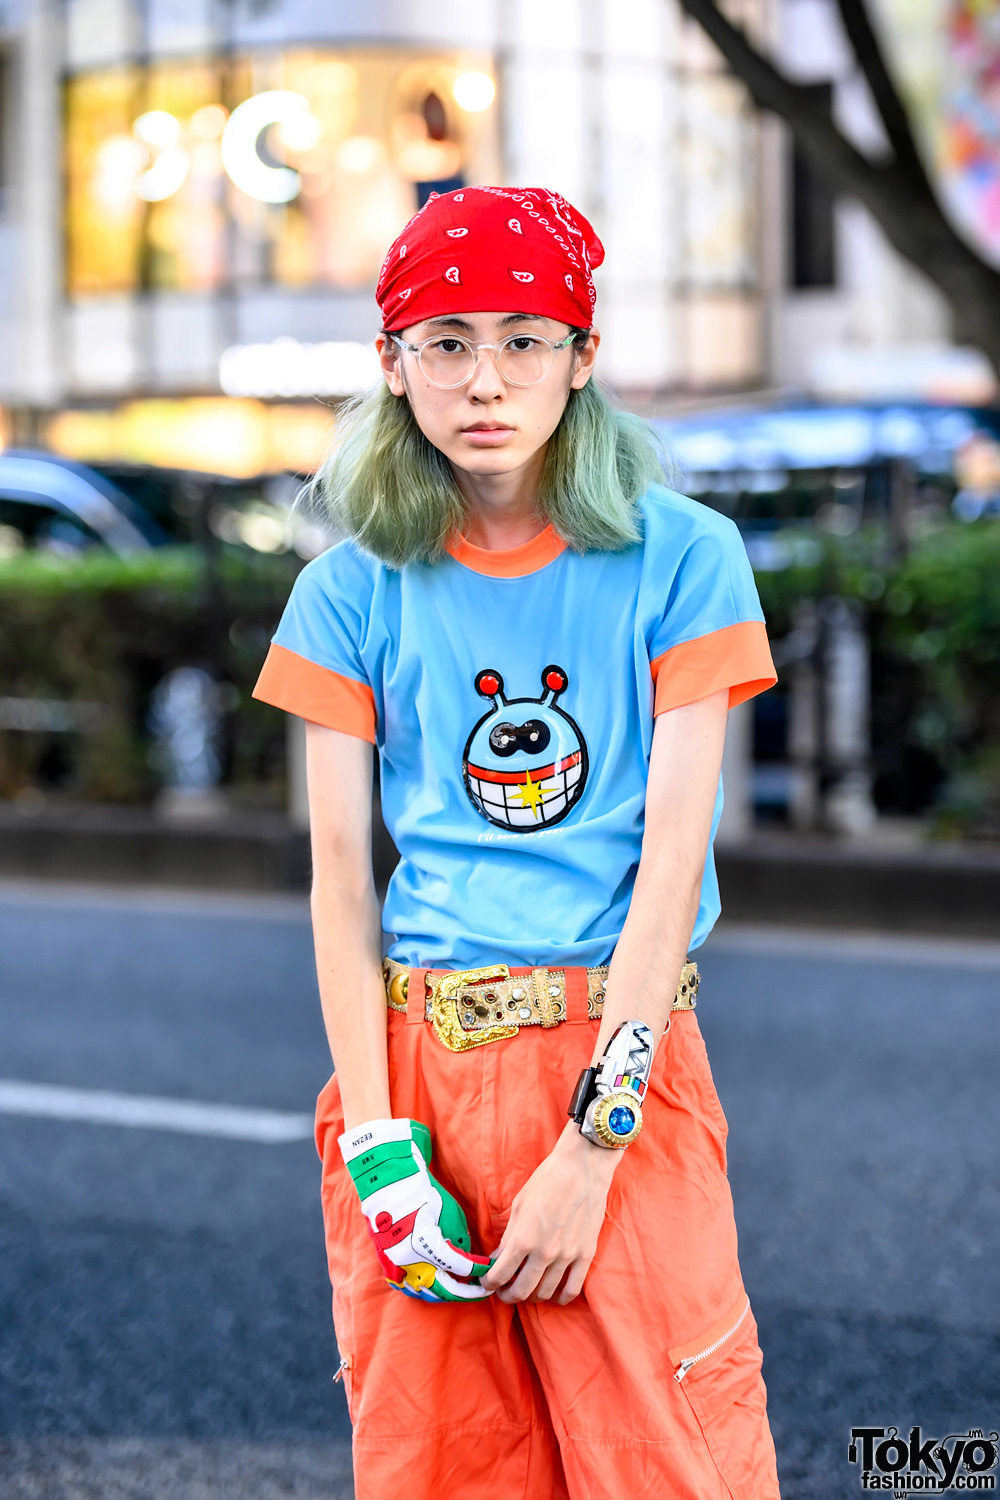 Tokyo Fashion on X: Japanese fashion shop manager Muyua on the